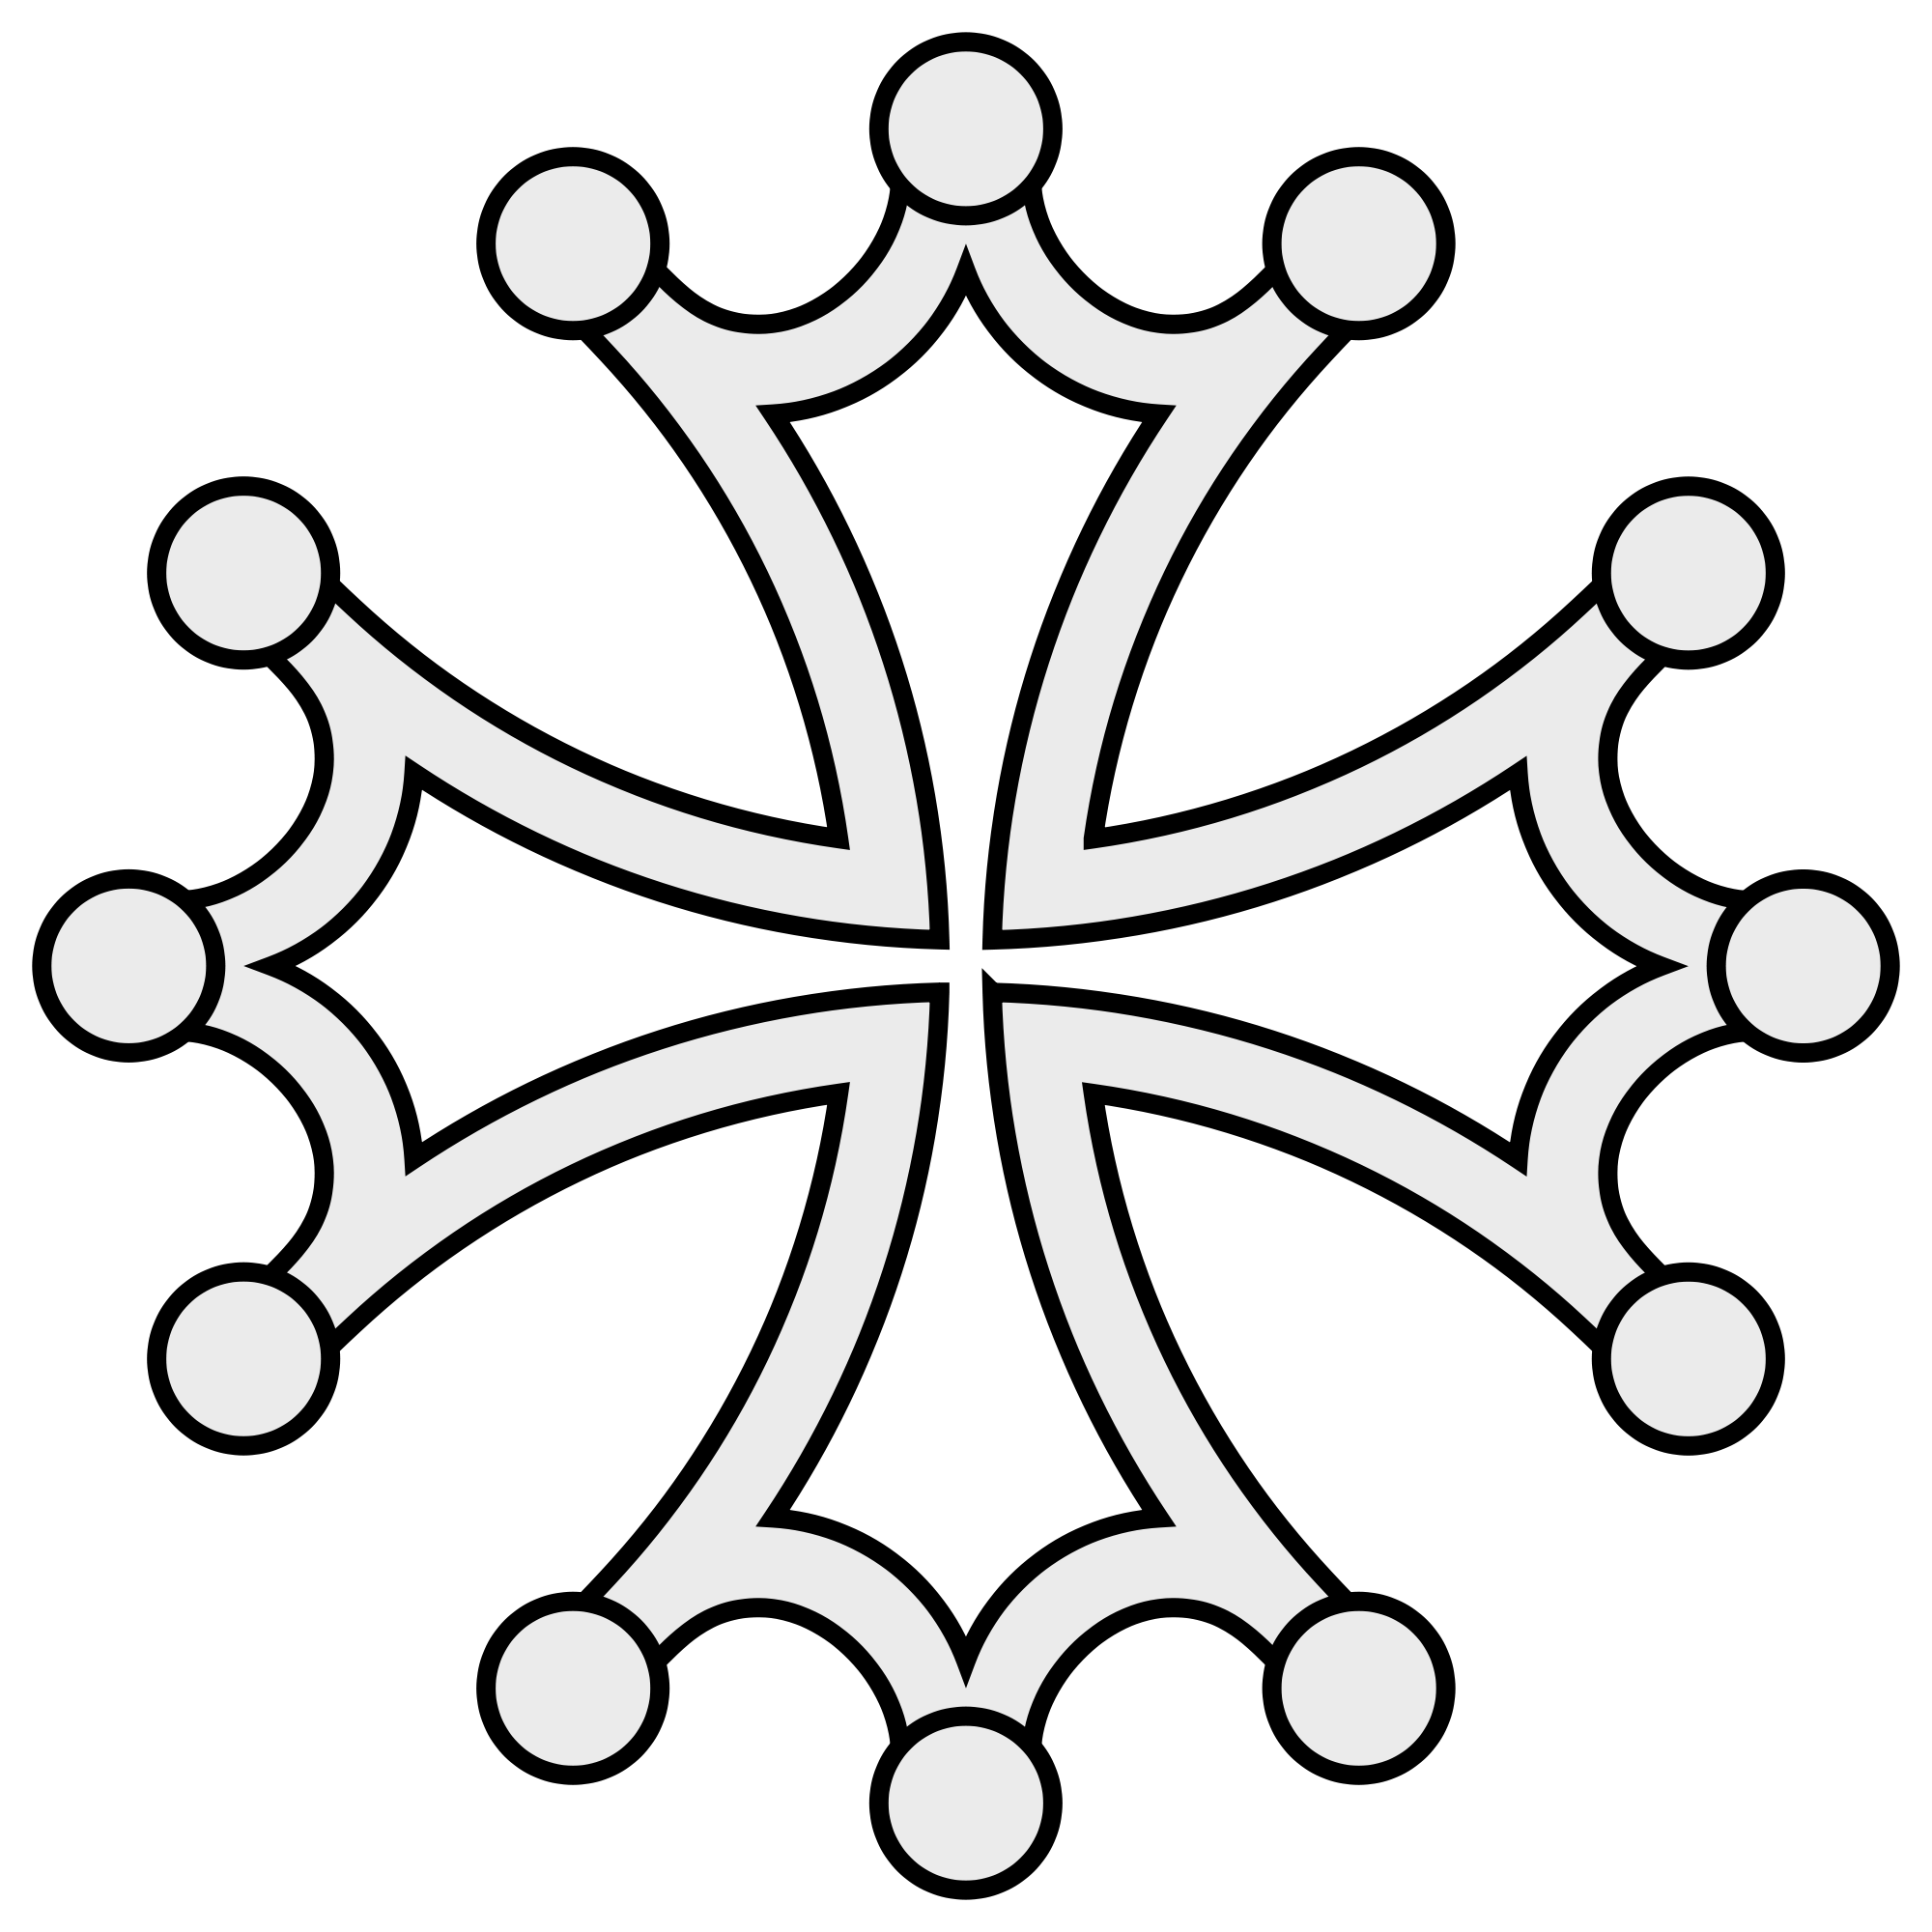 Clip art Cross pattée Occitan cross Crosses in heraldry - maltese cross